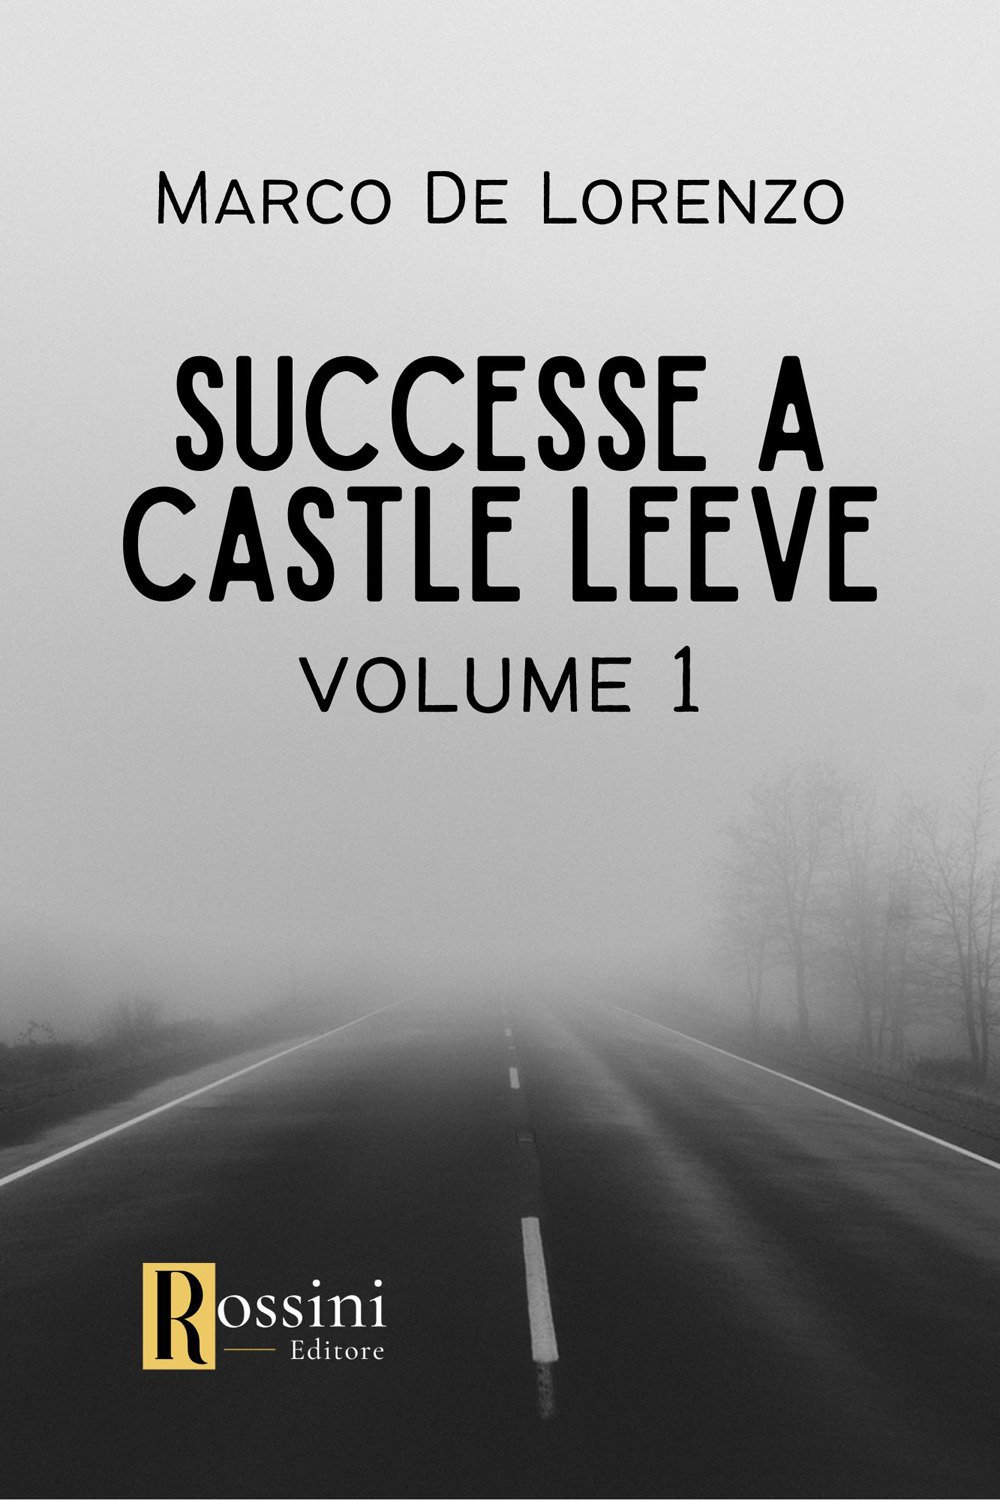 Successe a Castle Leeve. Vol. 1